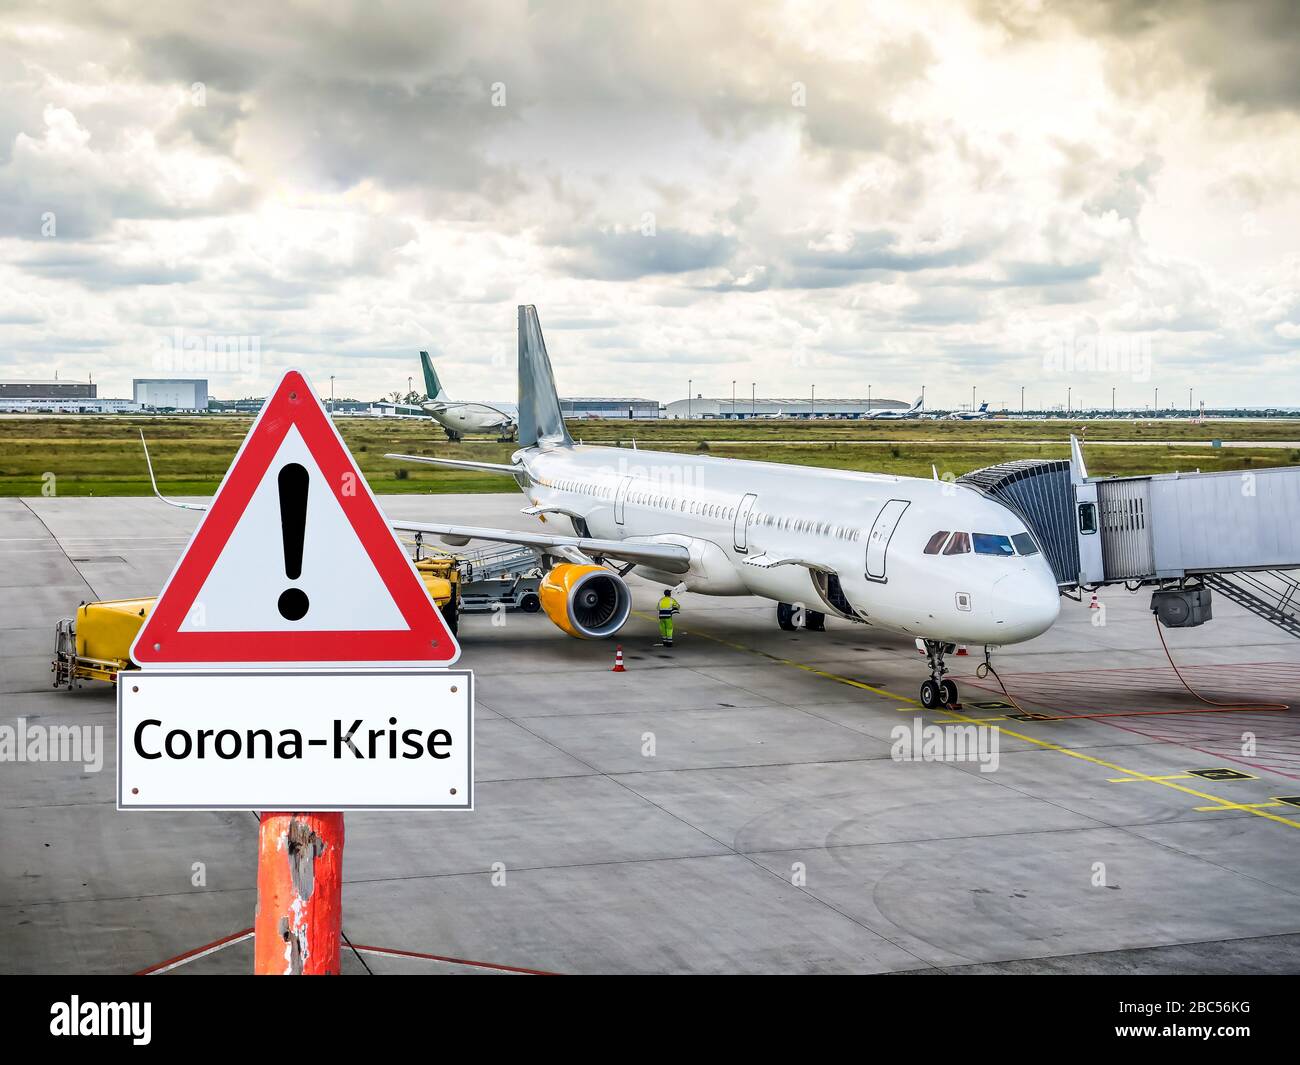 Corona crisis aviation warning sign in german Stock Photo